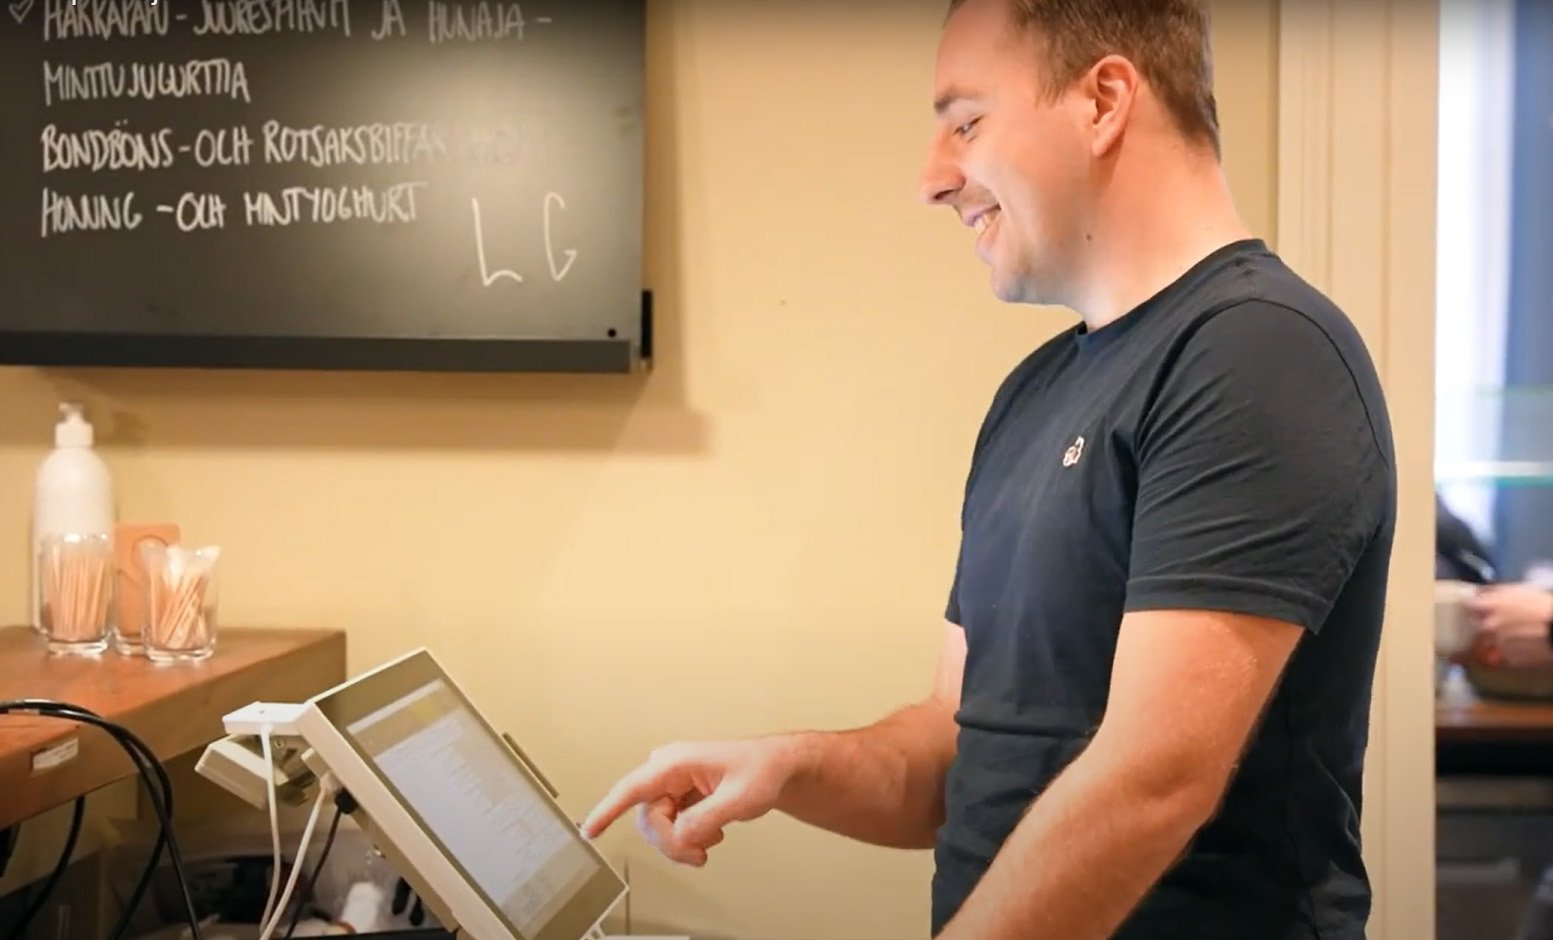 Joona Terävä from VoiVeljet, taps an order into the cash register system at a restaurant.